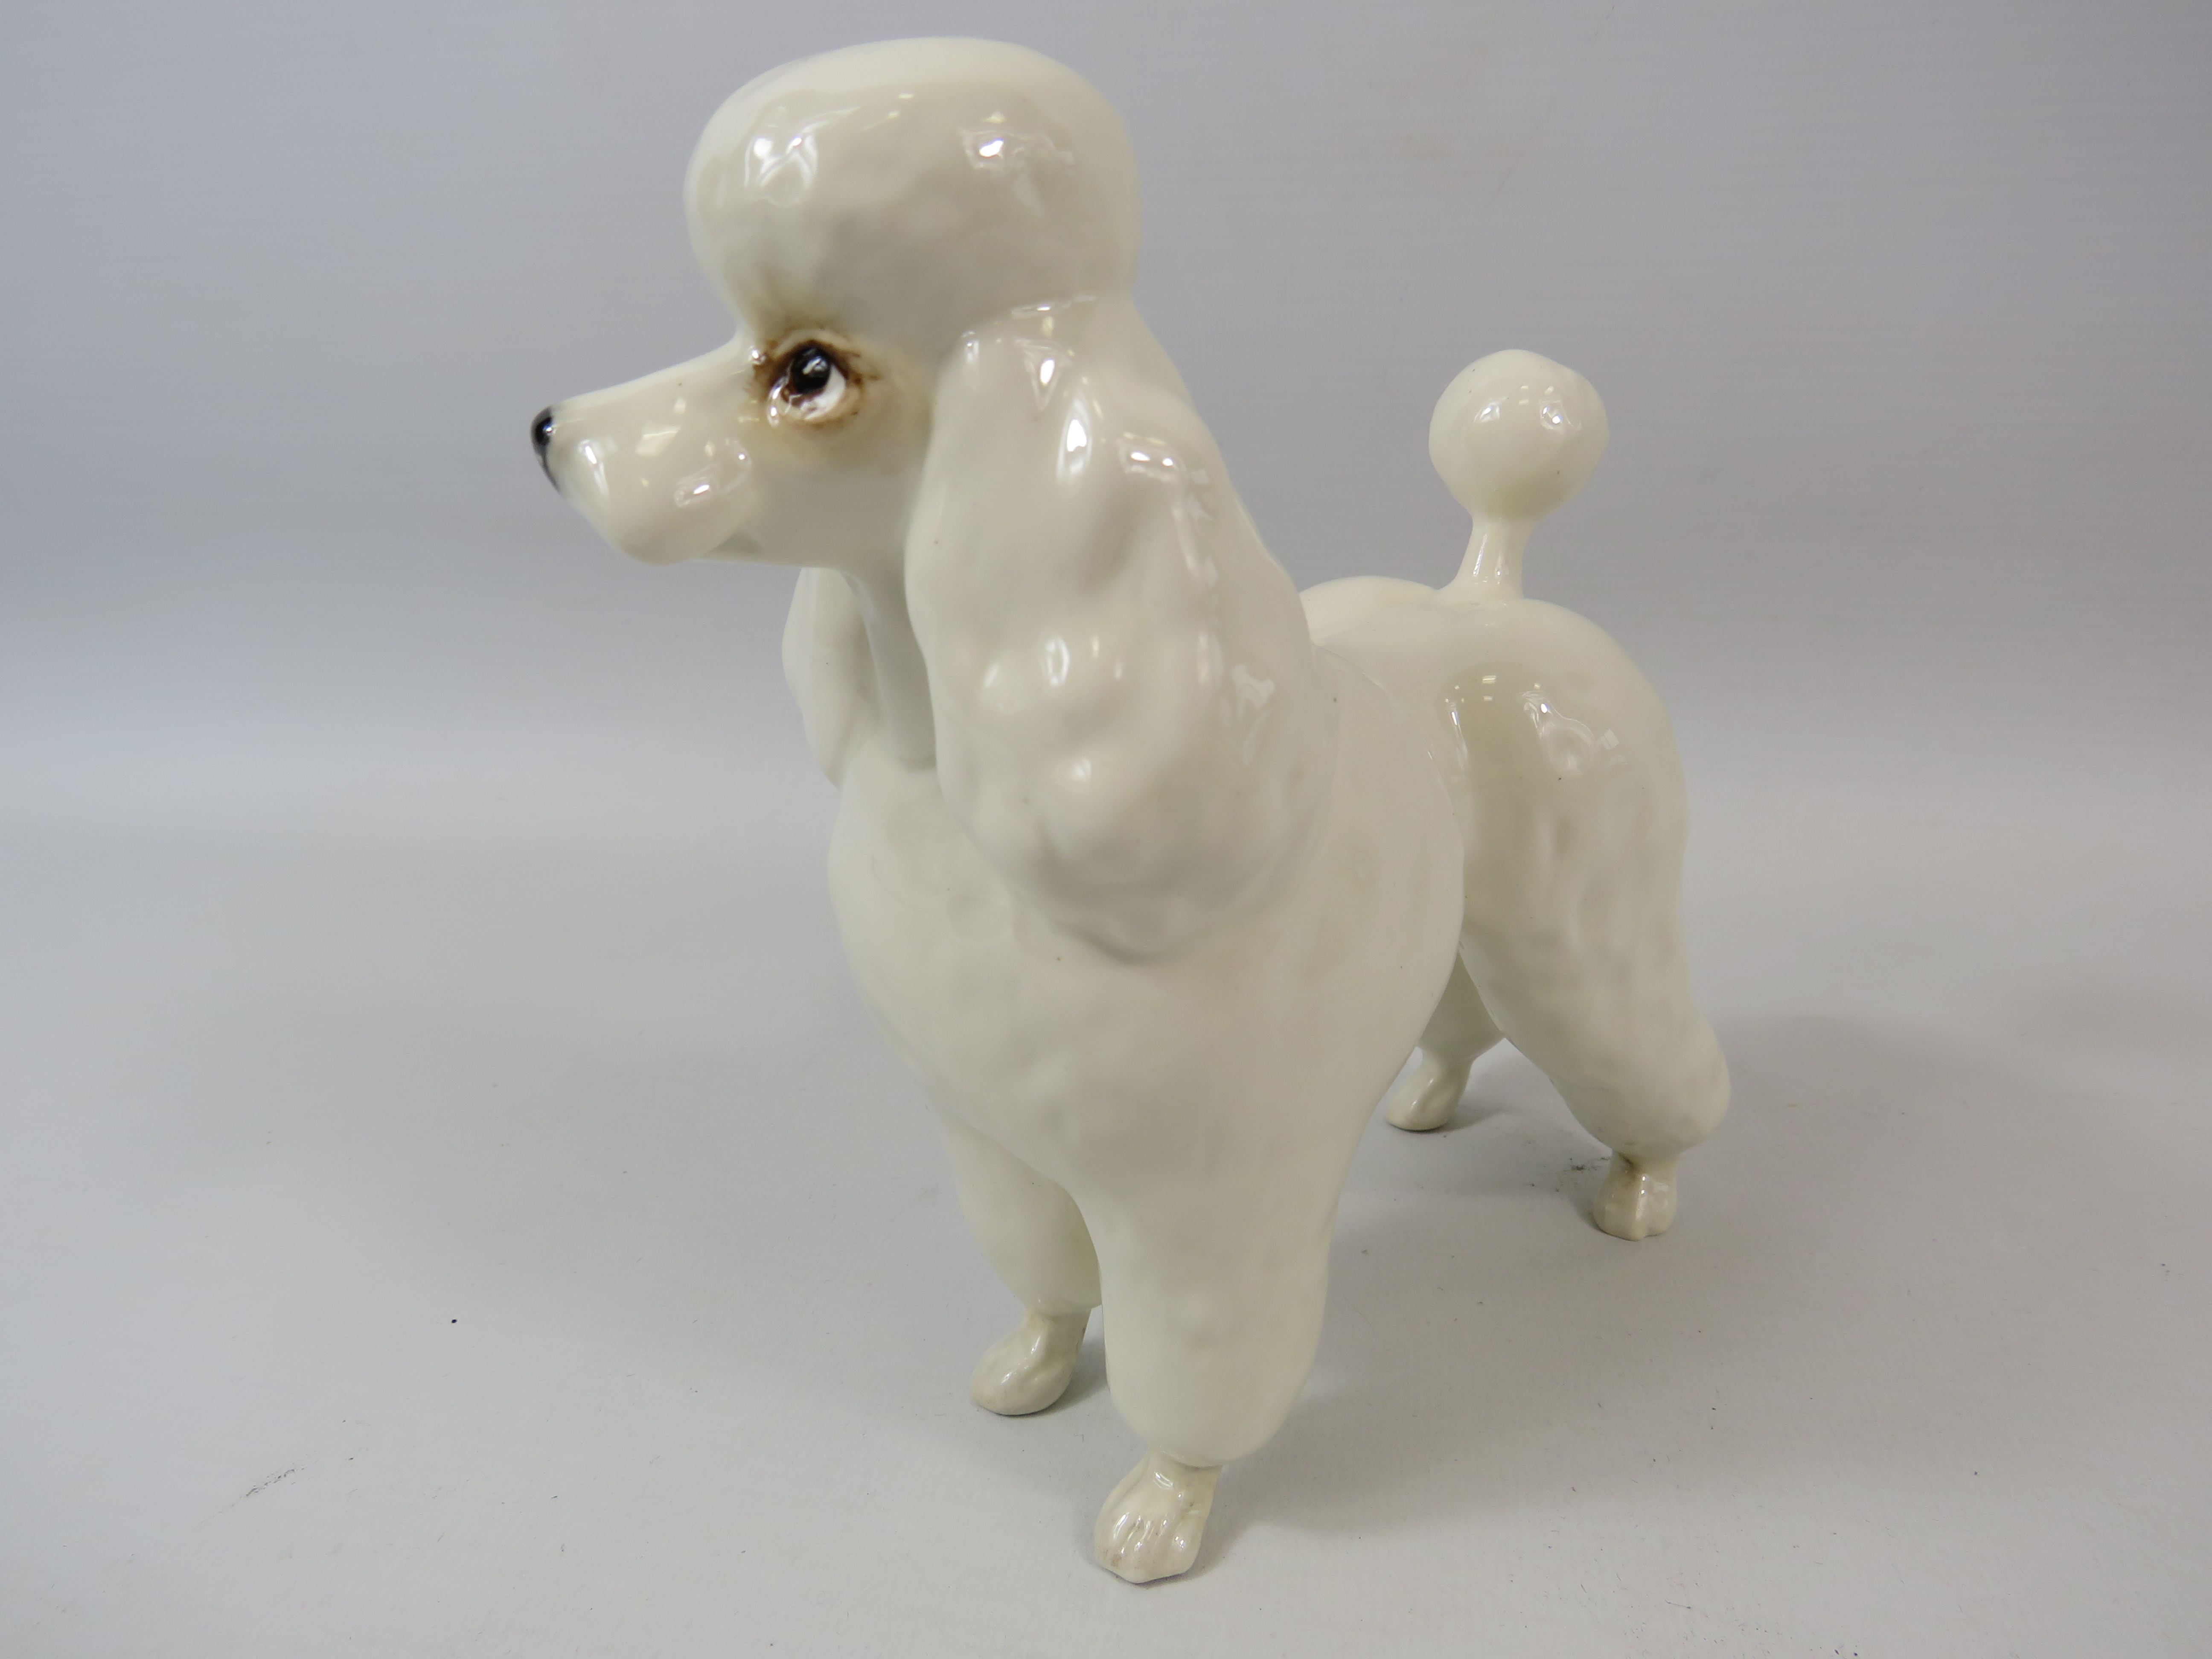 Beswick Poodle figurine. - Image 3 of 4